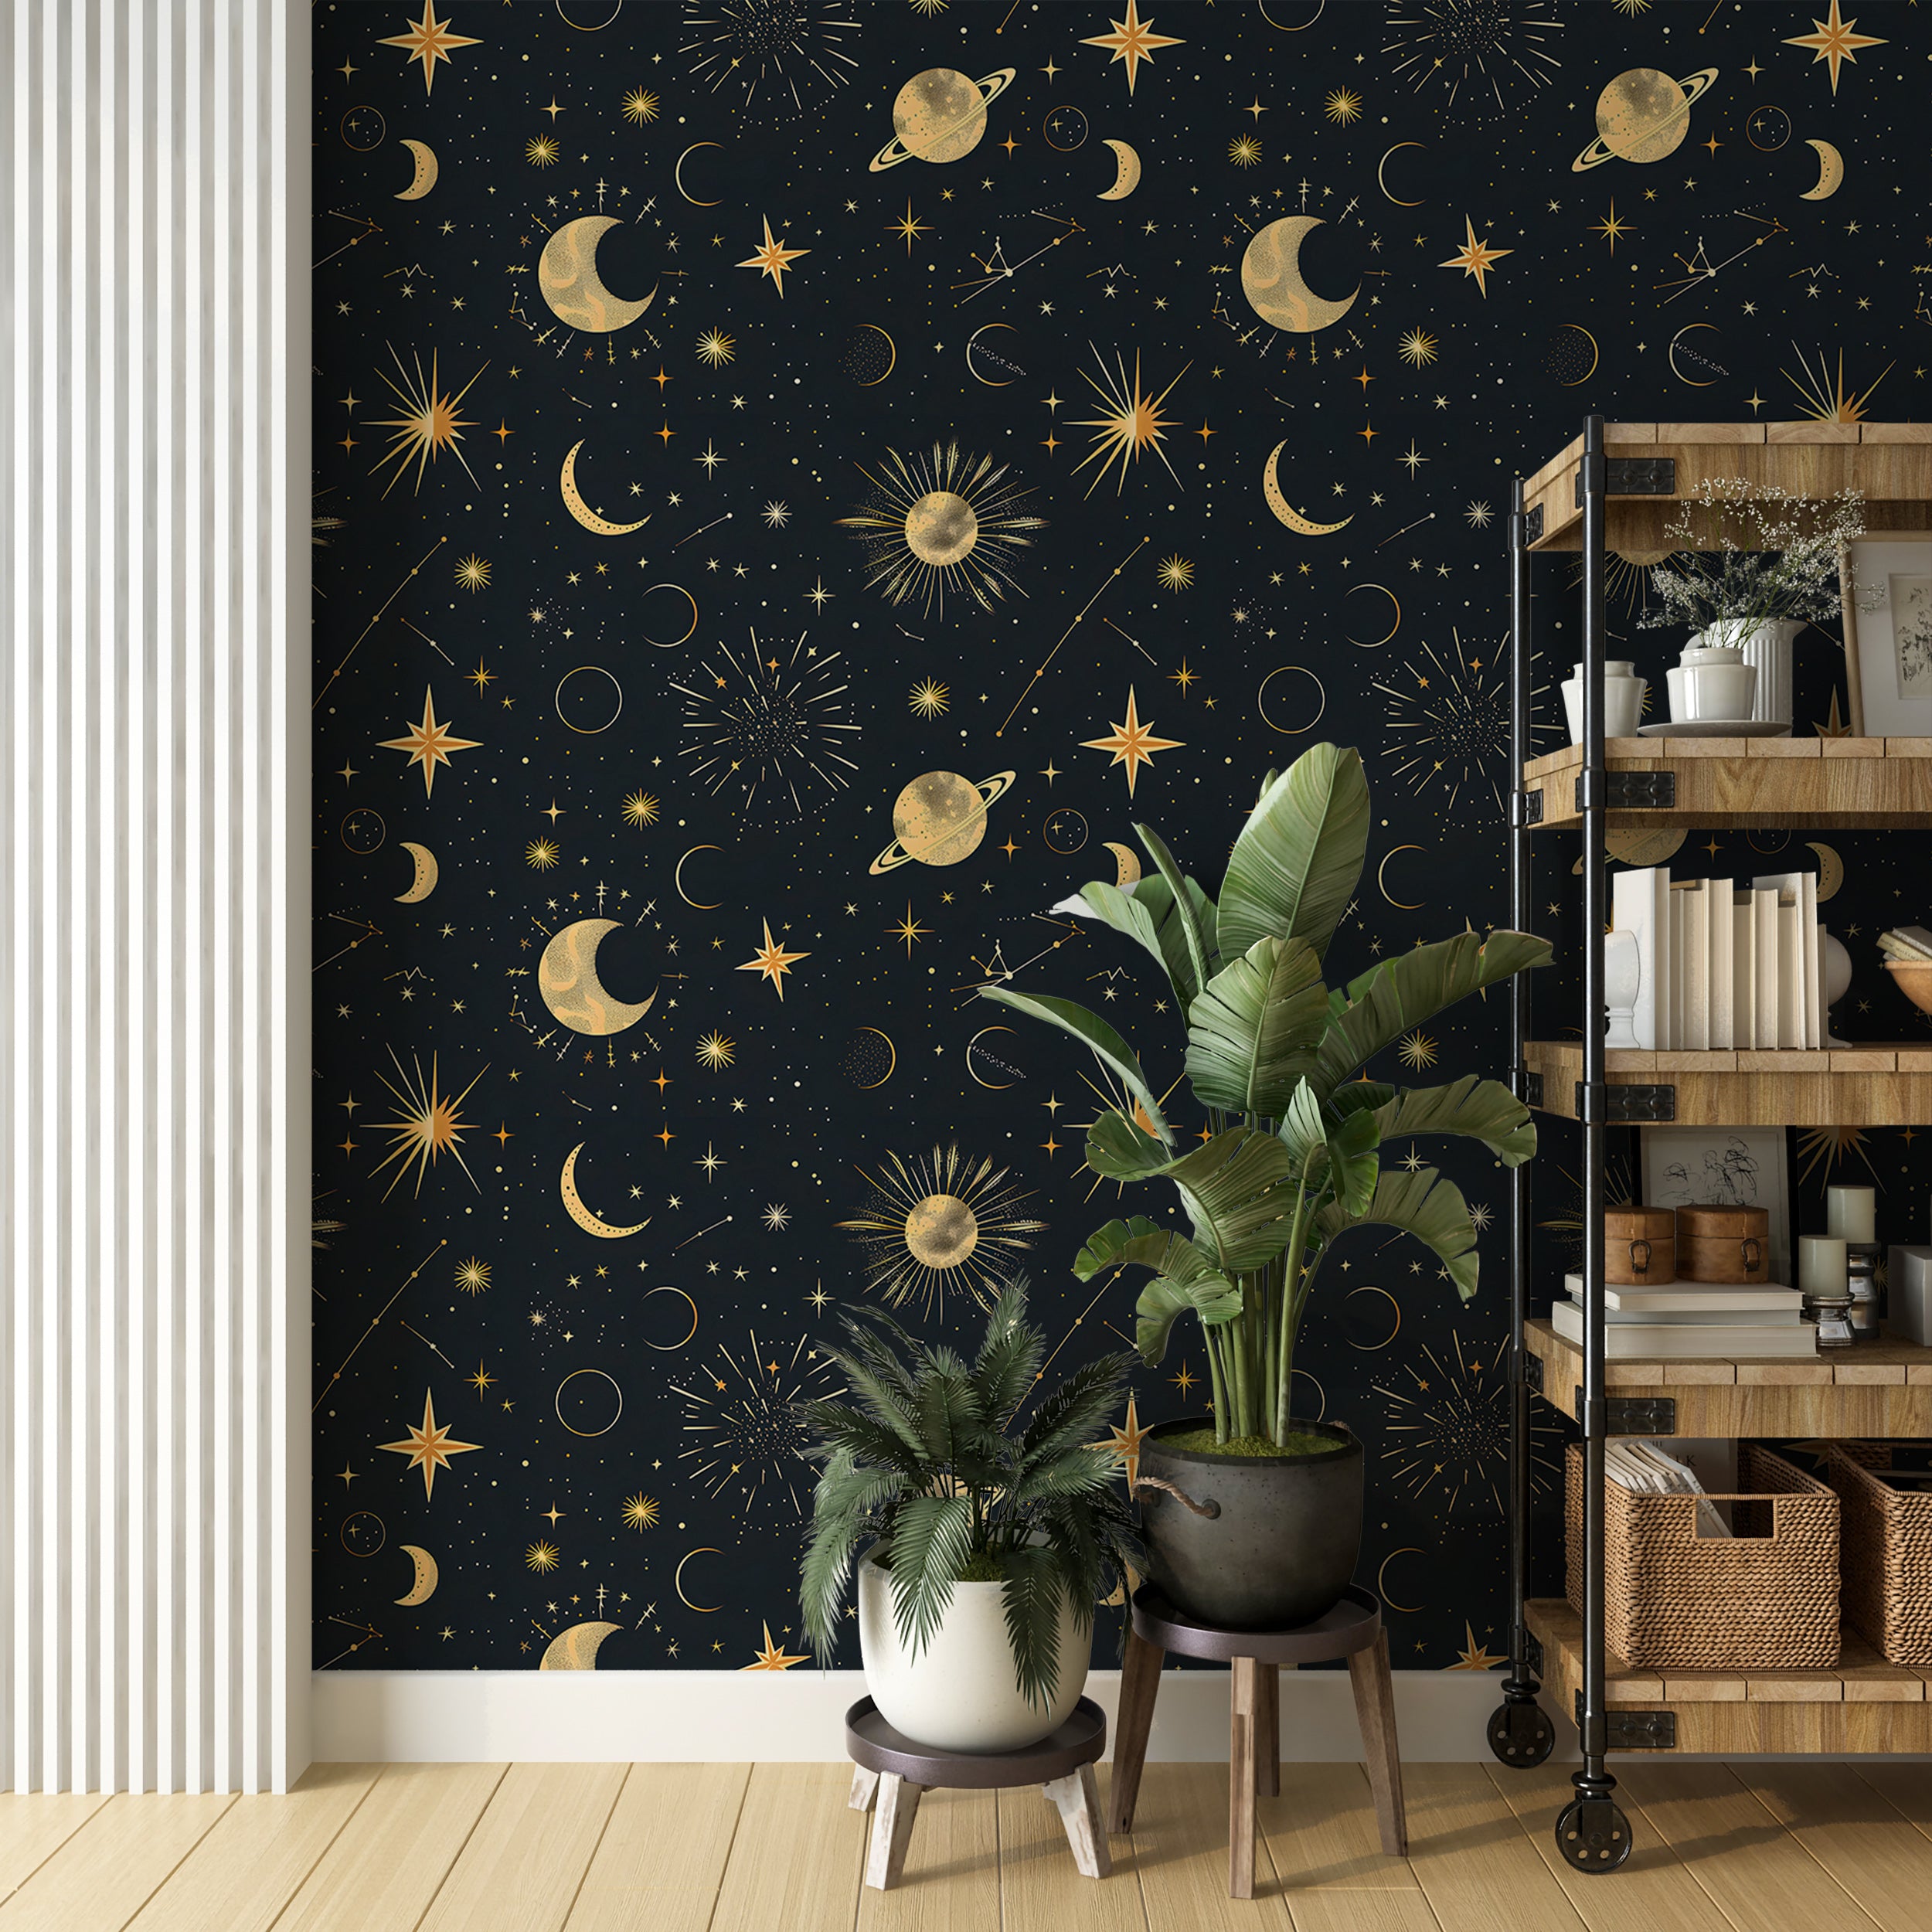 Celestial night sky mural